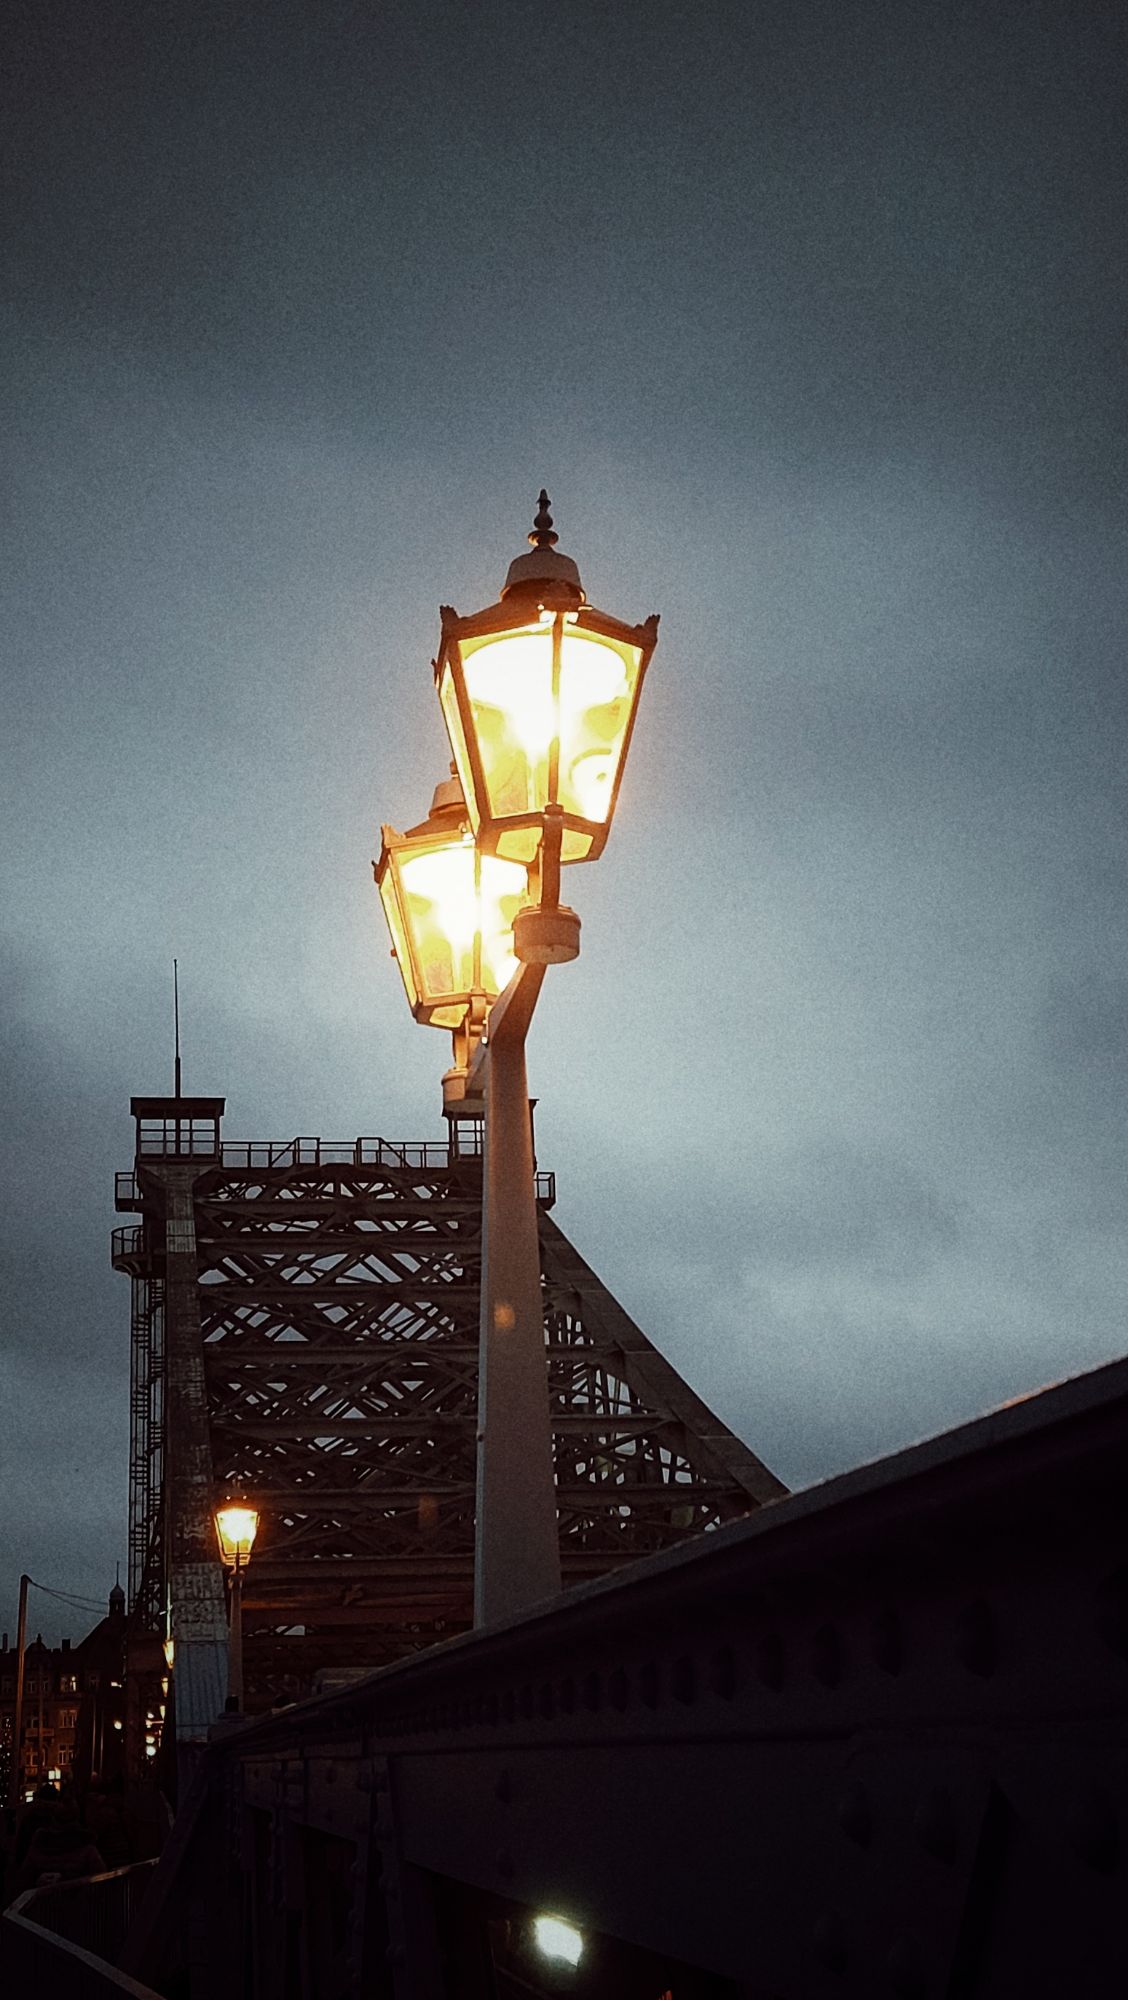 Lanterns on an old bridge, greyish sky behind.